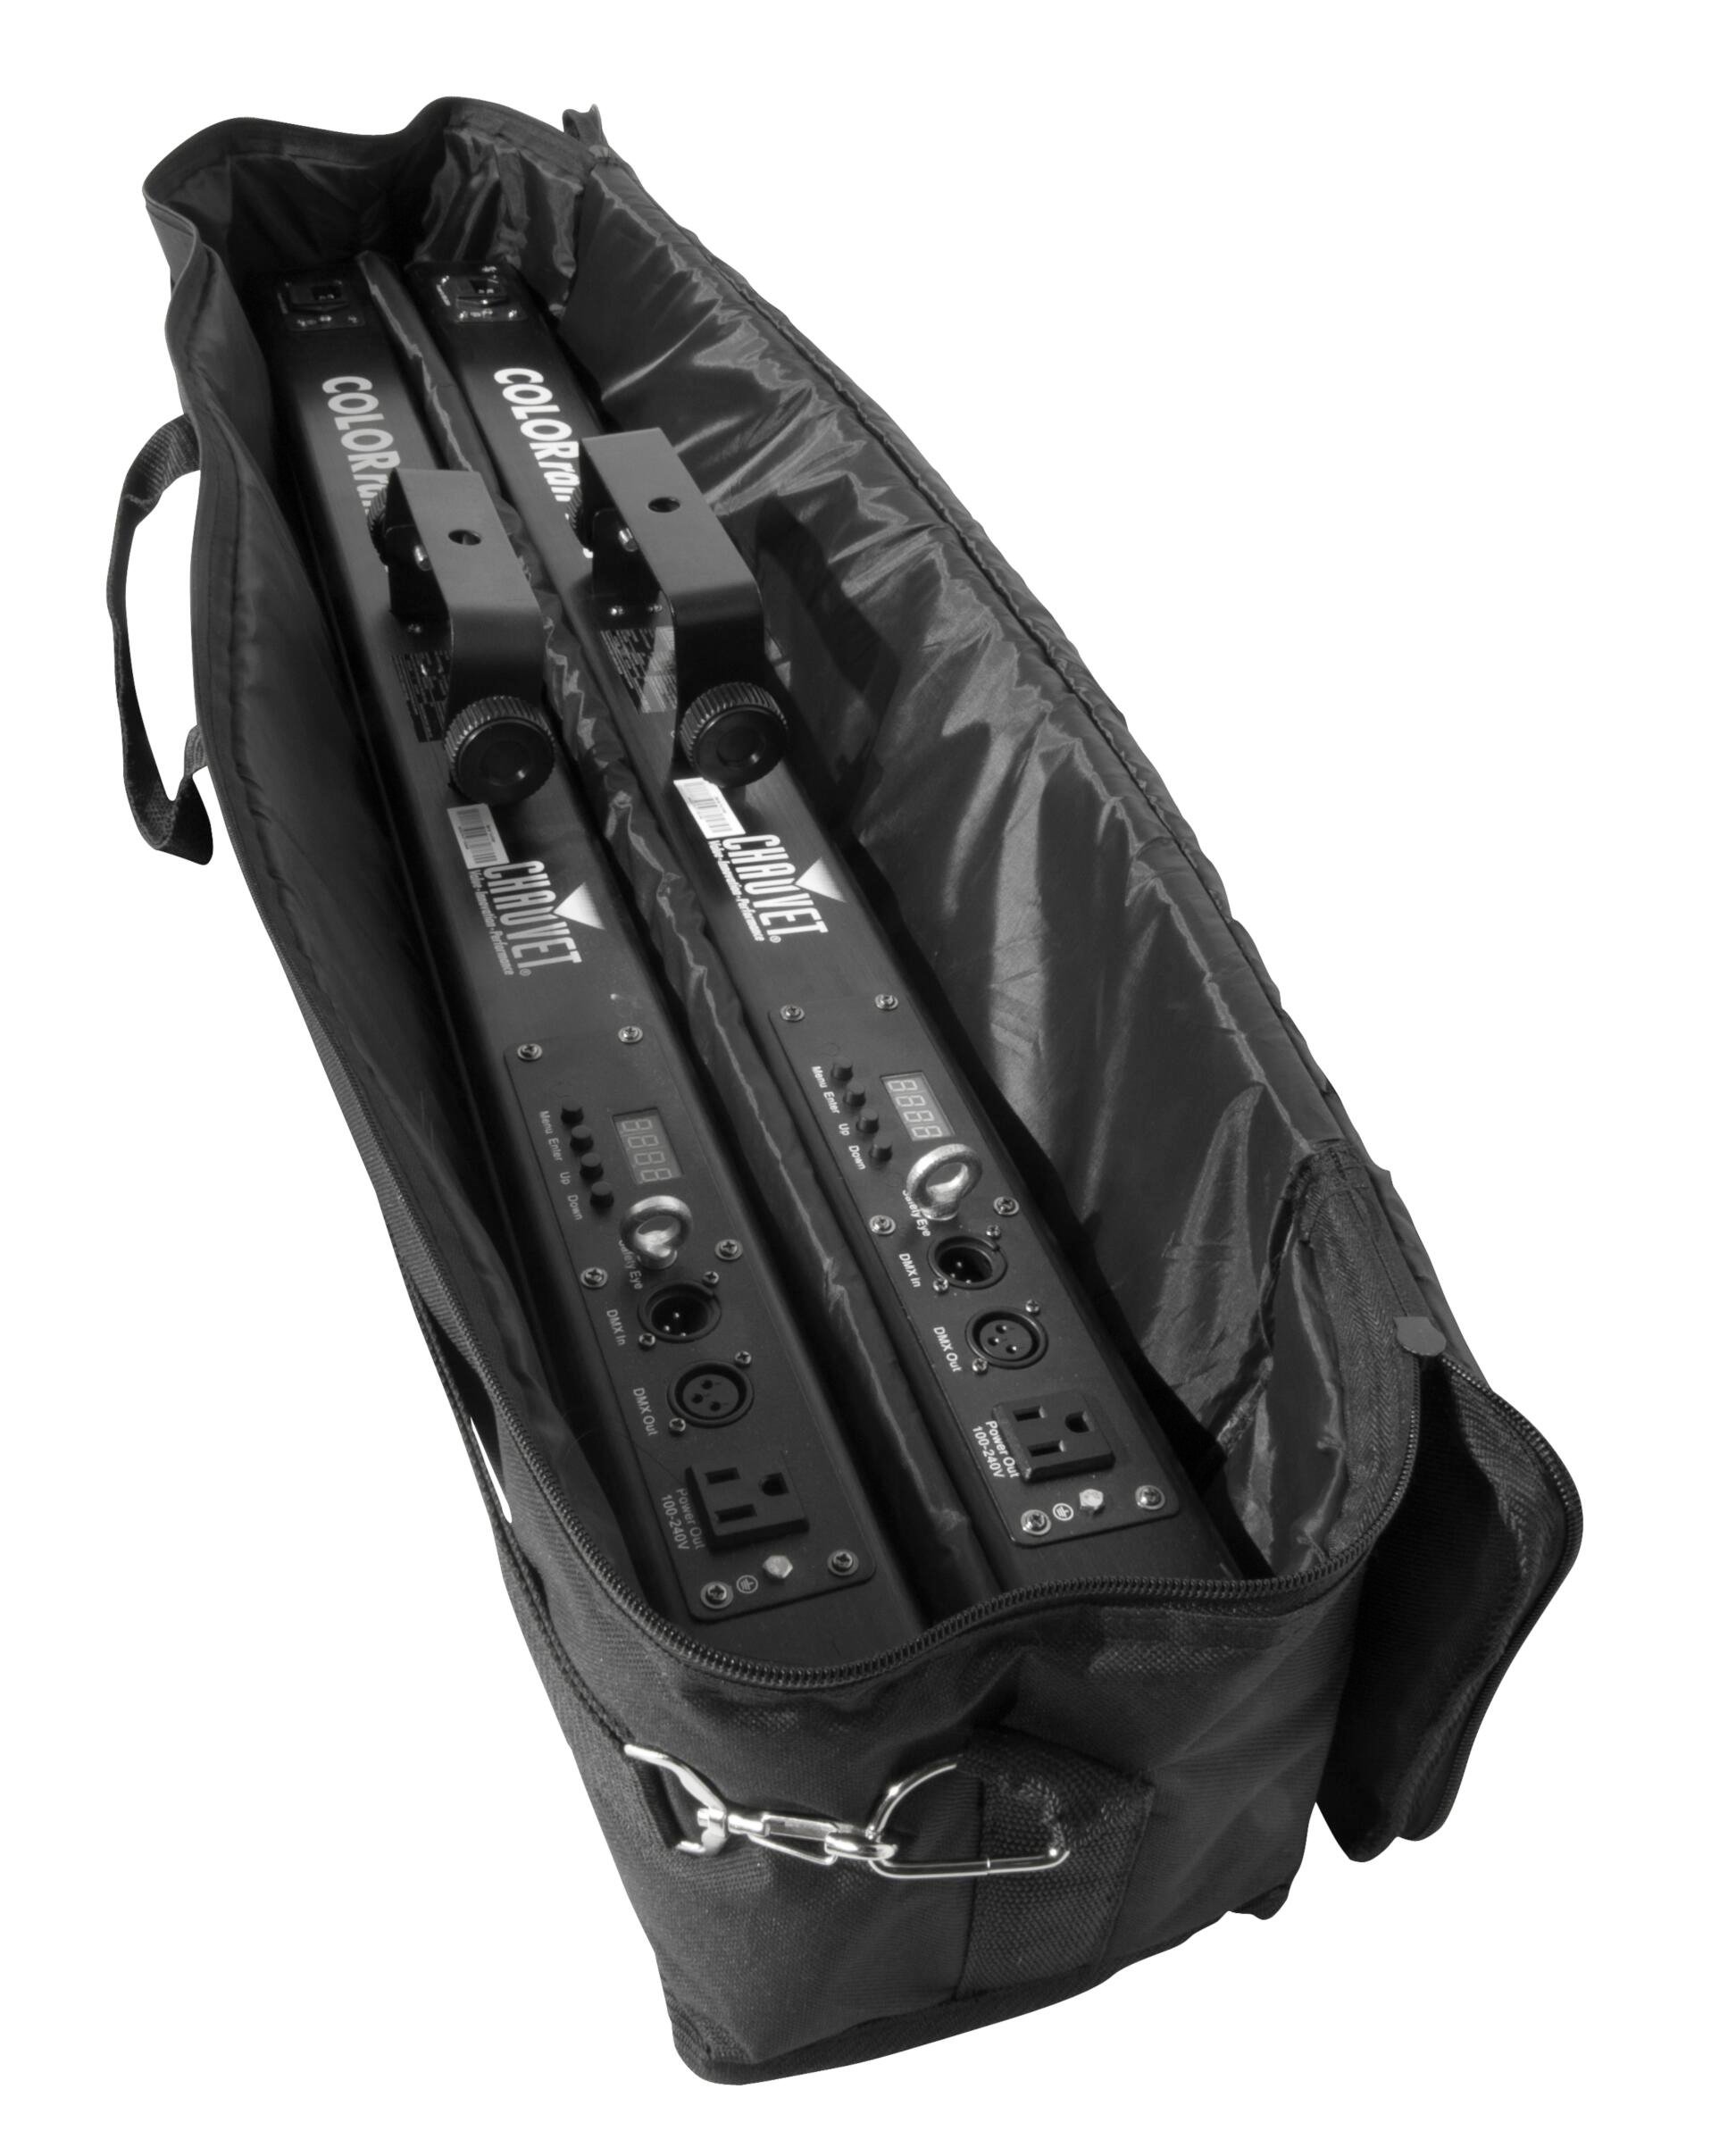 Pro Audio, Lighting and Video Systems Chauvet DJ CHS-60 Dual LED Light Bar  Bag